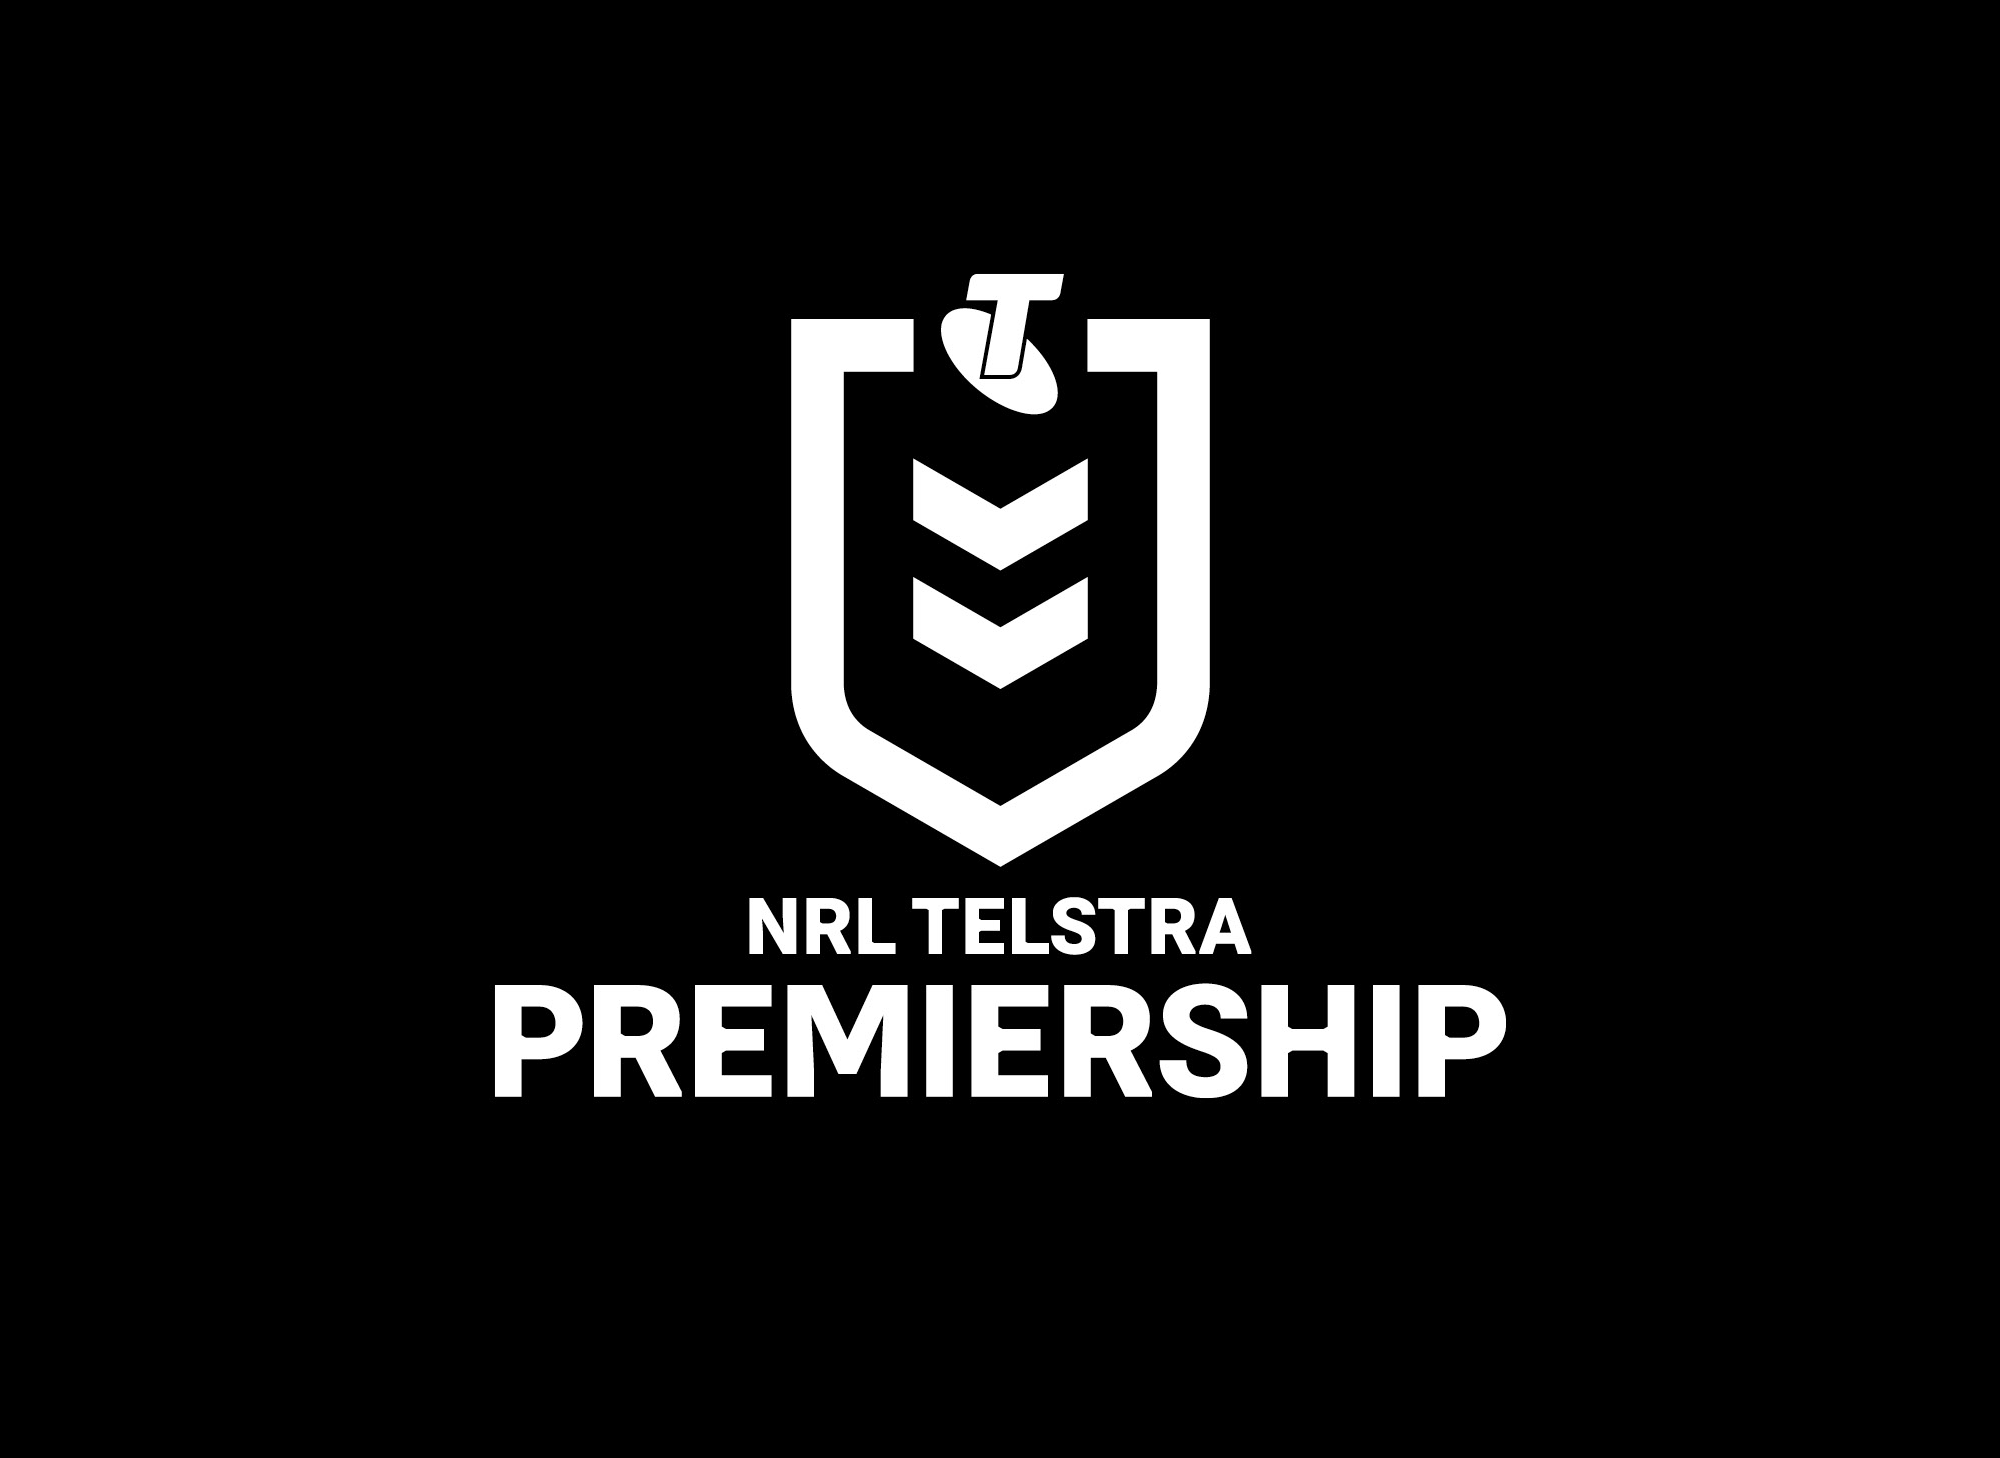 NRL Logo - Brand New: New Logo and Identity for NRL Telstra Premiership by WK ...